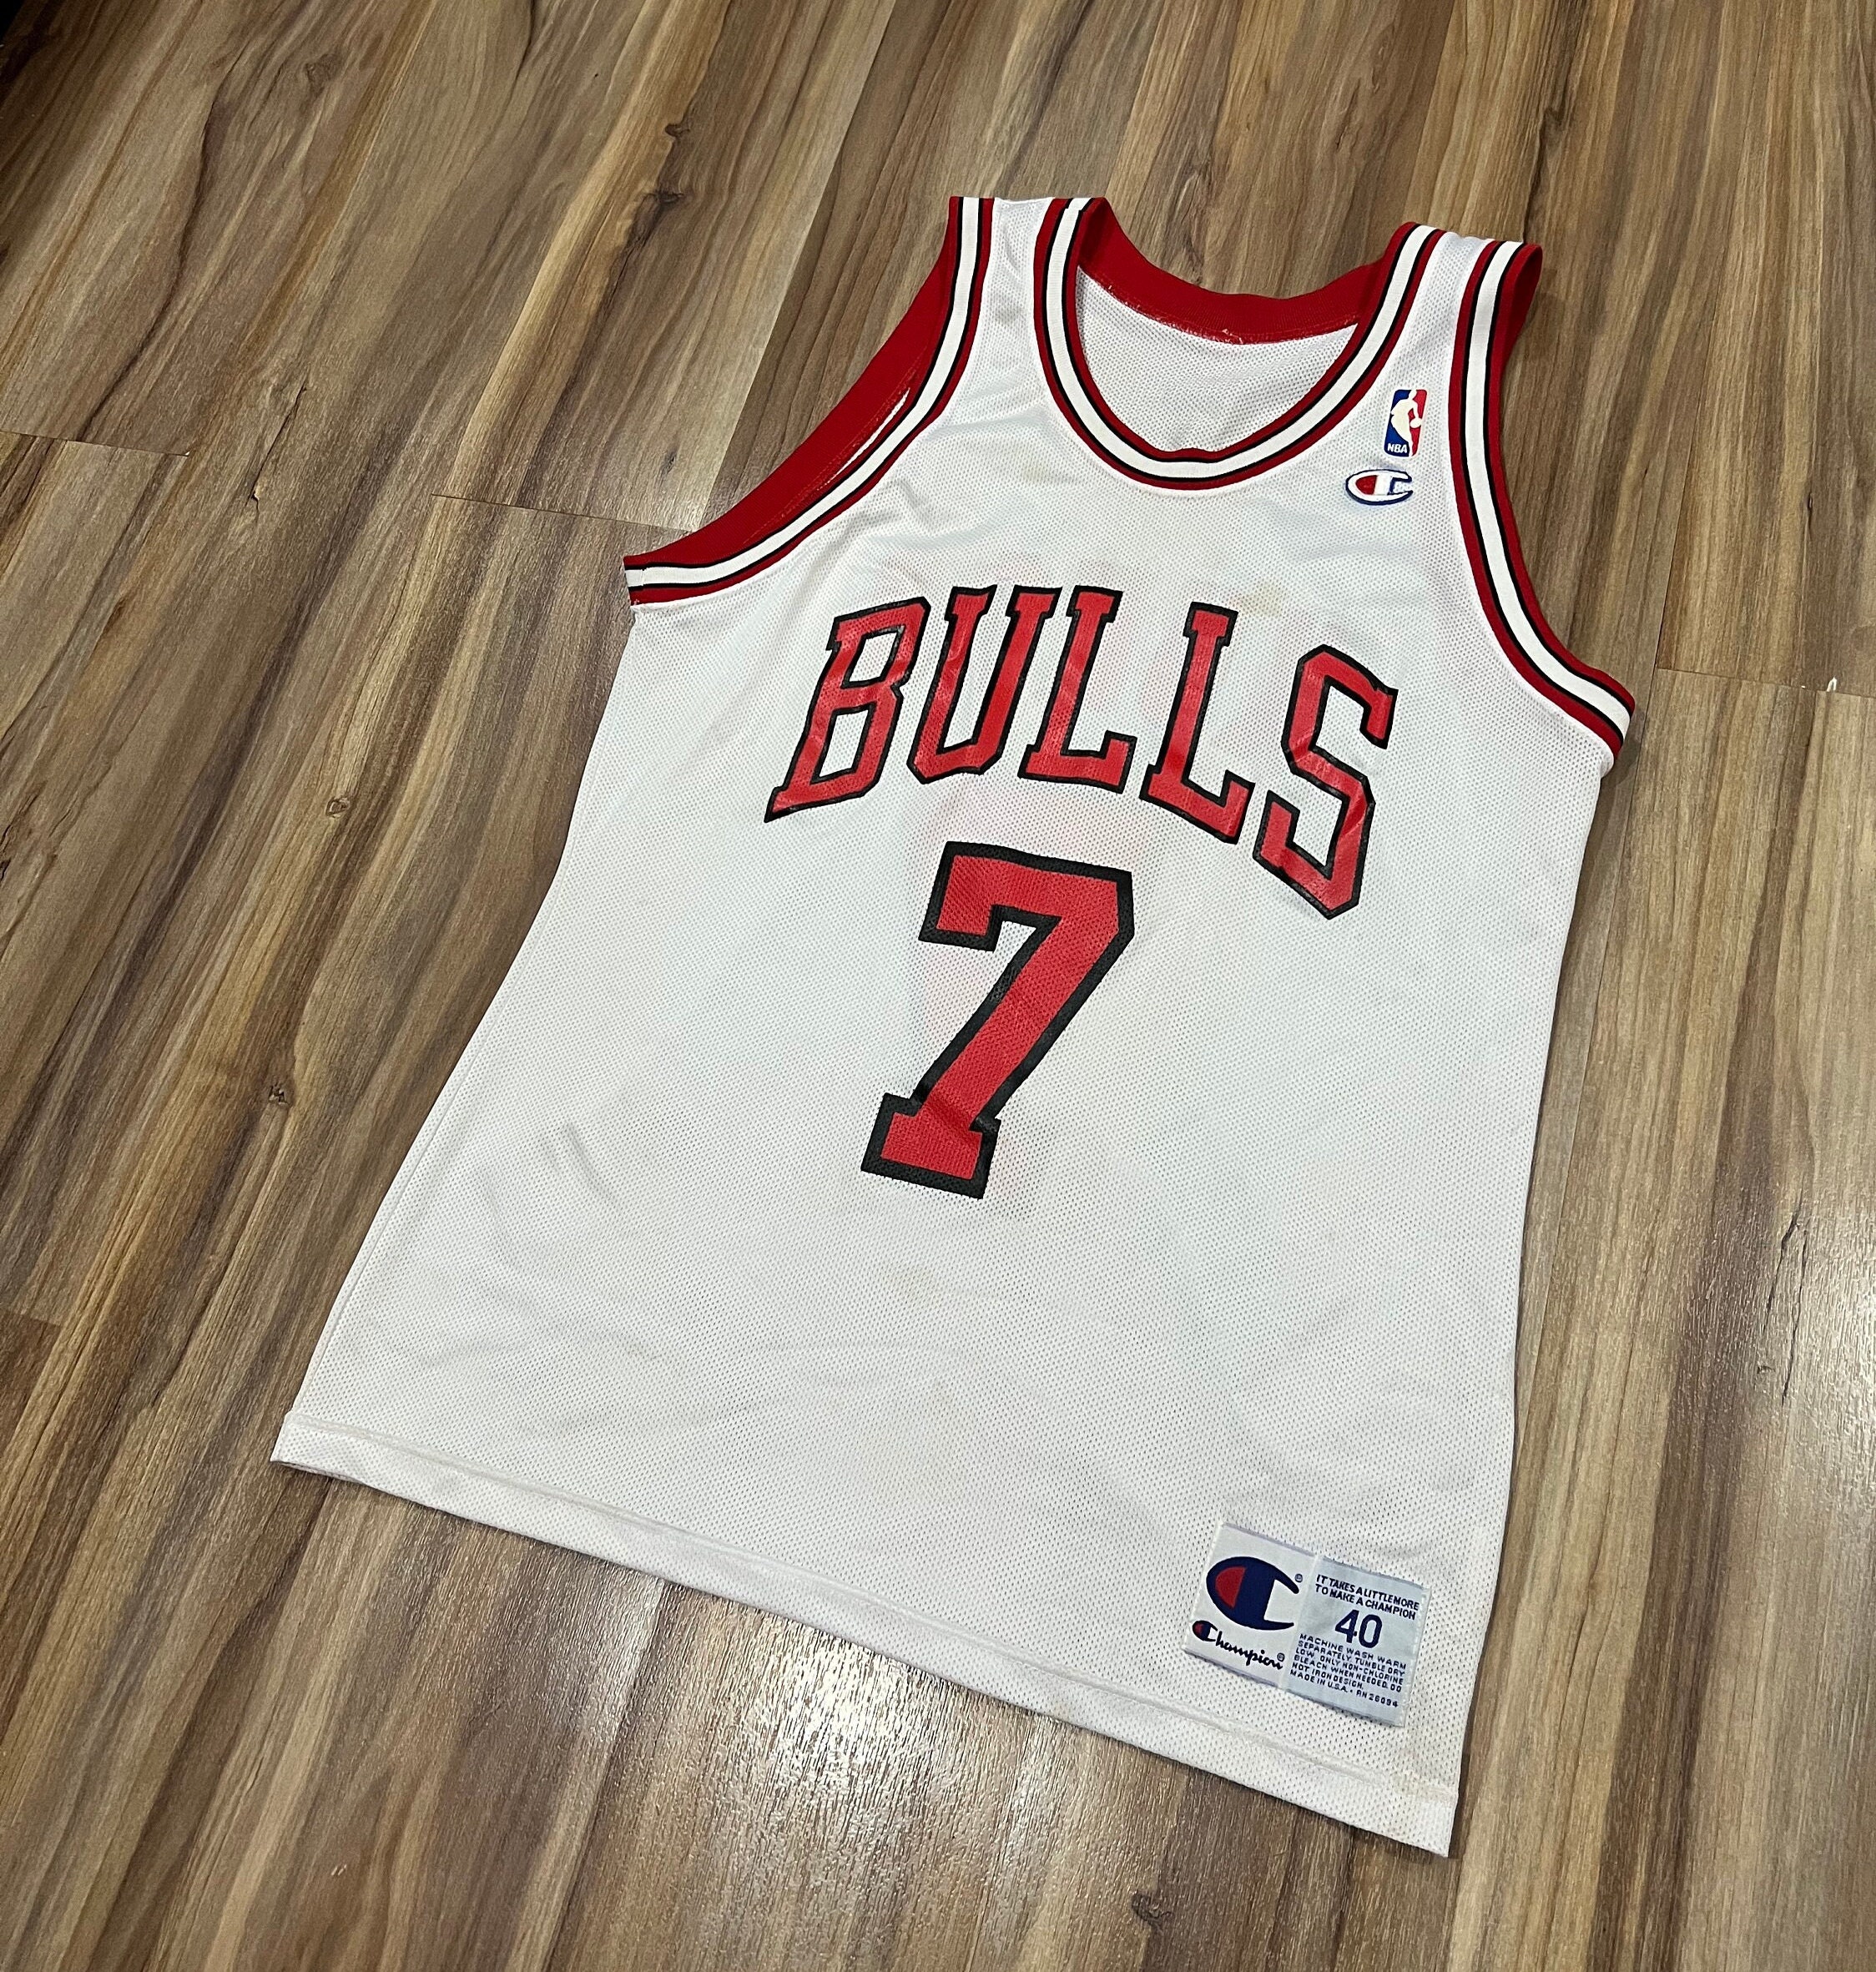 Athletic Knit 1995-96 Chicago Bulls Basketball Jerseys